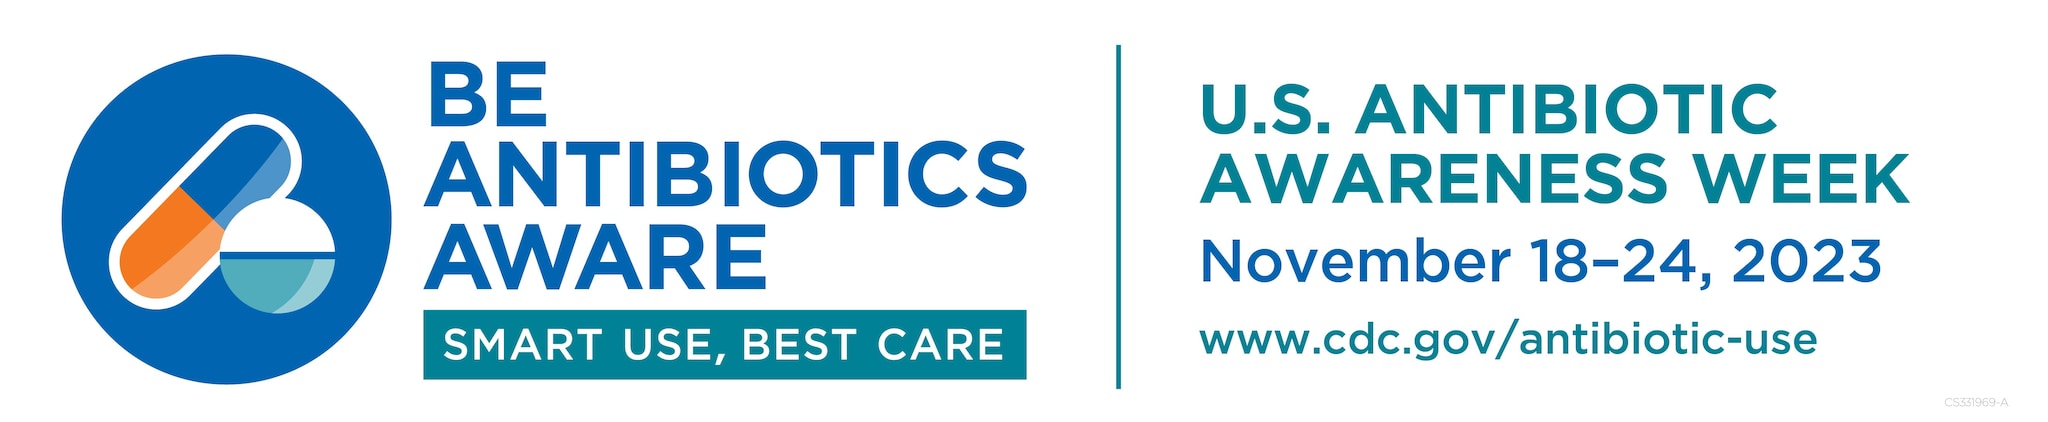 U.S. Antibiotic Awareness Week (USAAW) Banner Nov 18-24, 2023